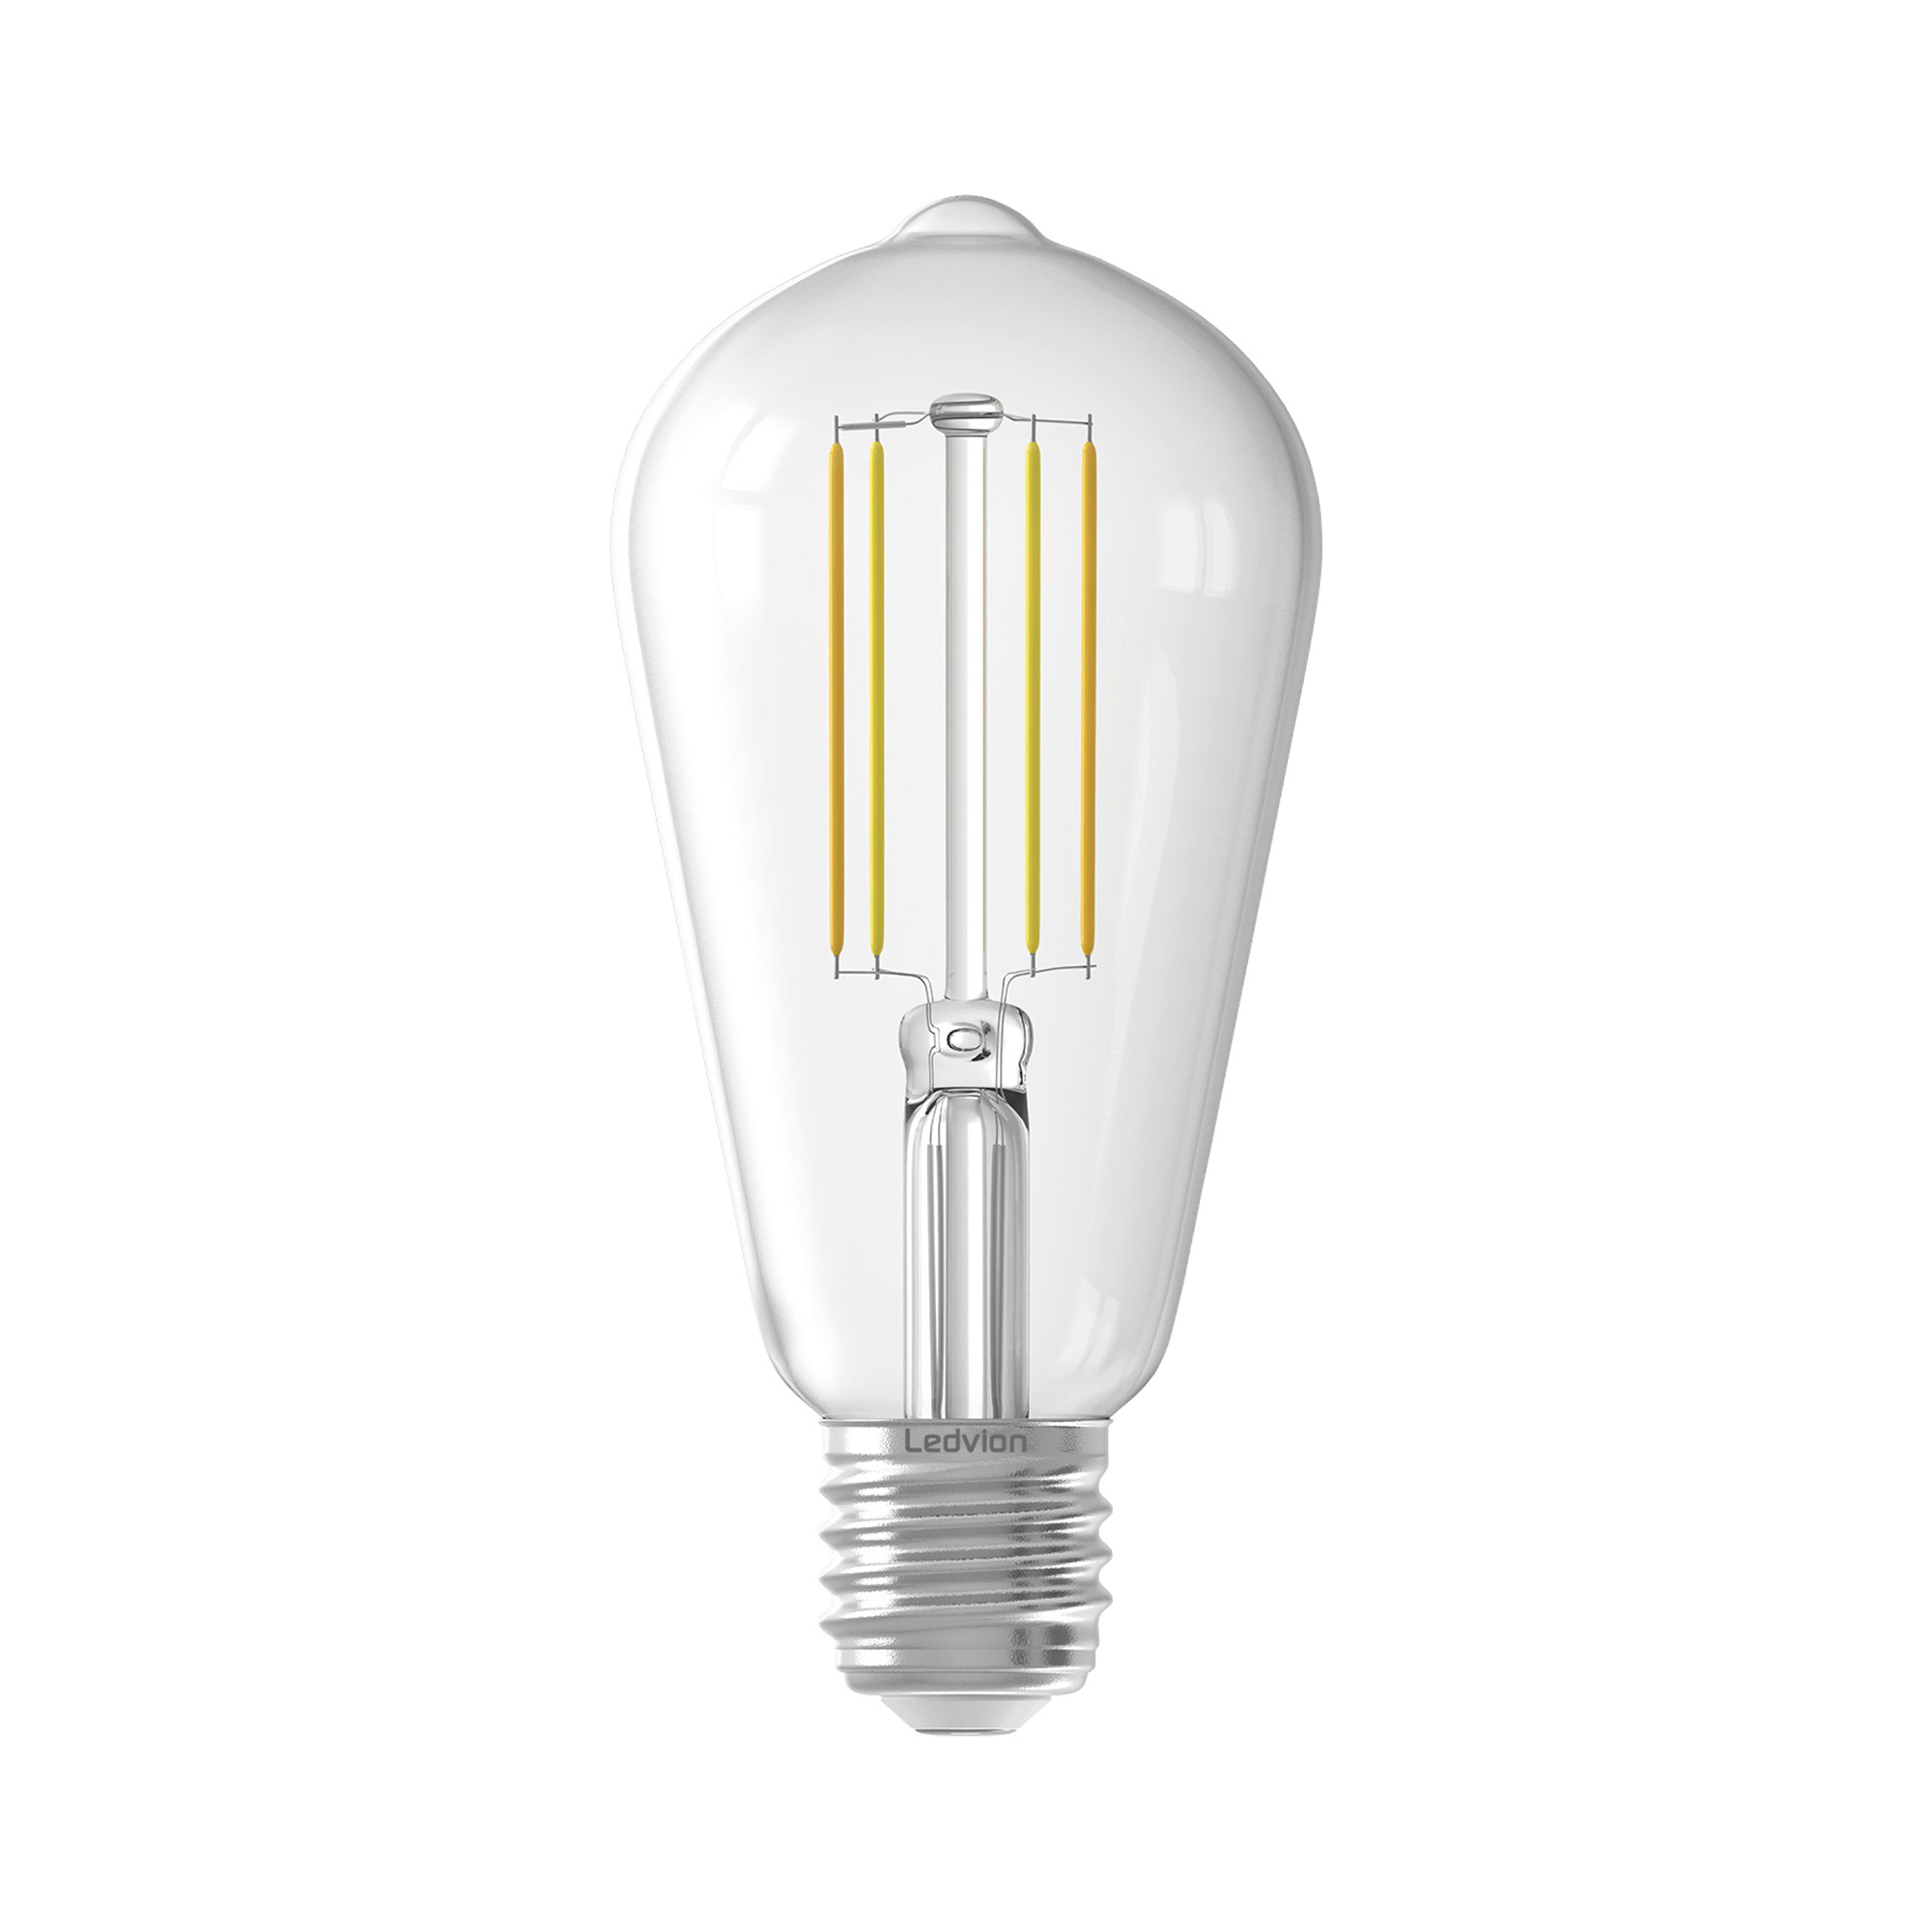 Sortie Misbruik Terughoudendheid Ledvion Dimbare E27 LED Lamp - 4.5W - 2300K - 470 Lumen - Lightexpert.nl